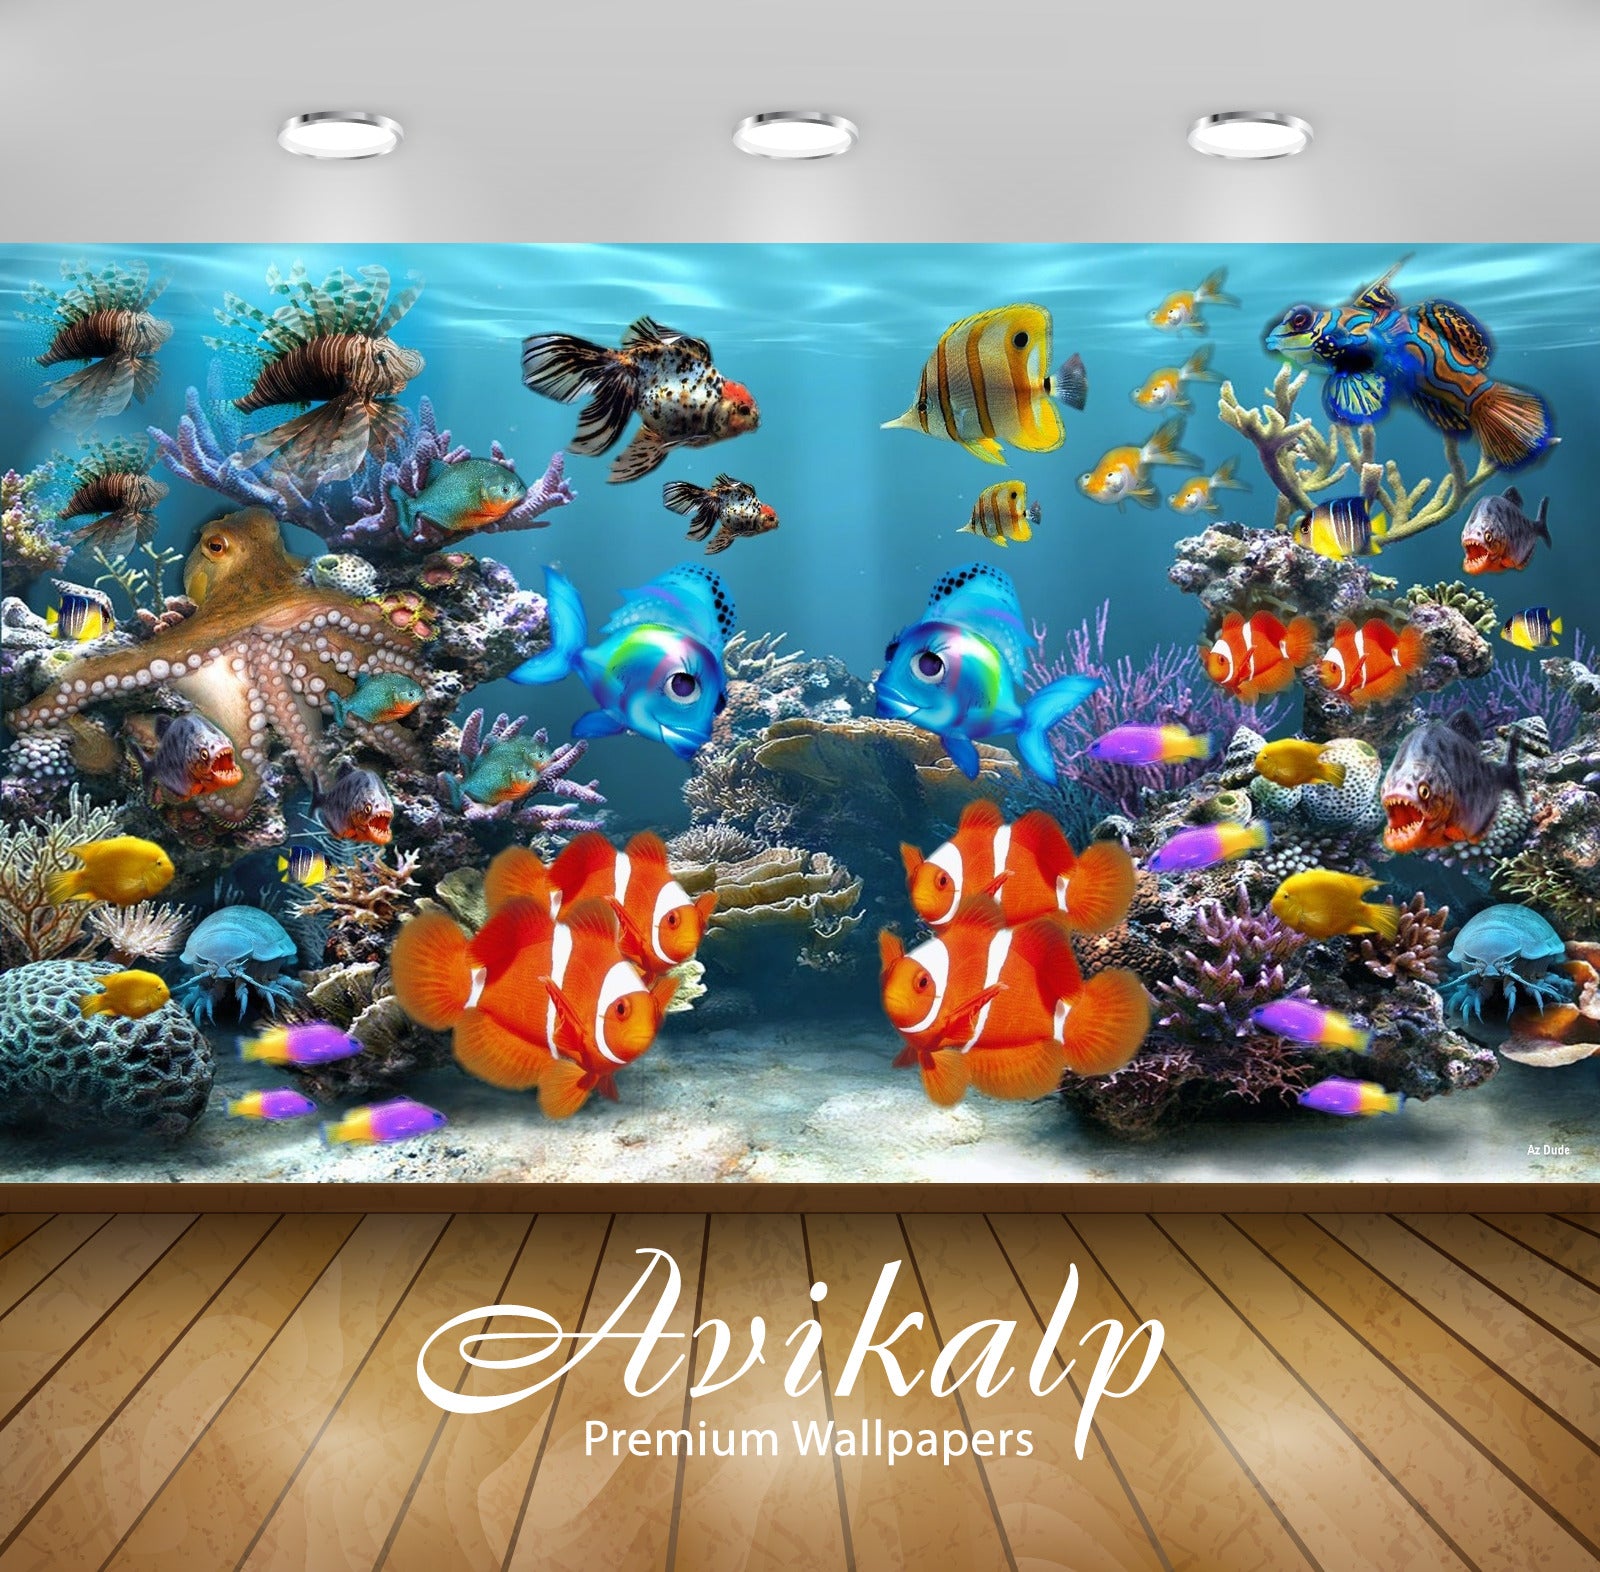 Avikalp Exclusive Aquarium Wallpaper AWI1072 HD Wallpapers for